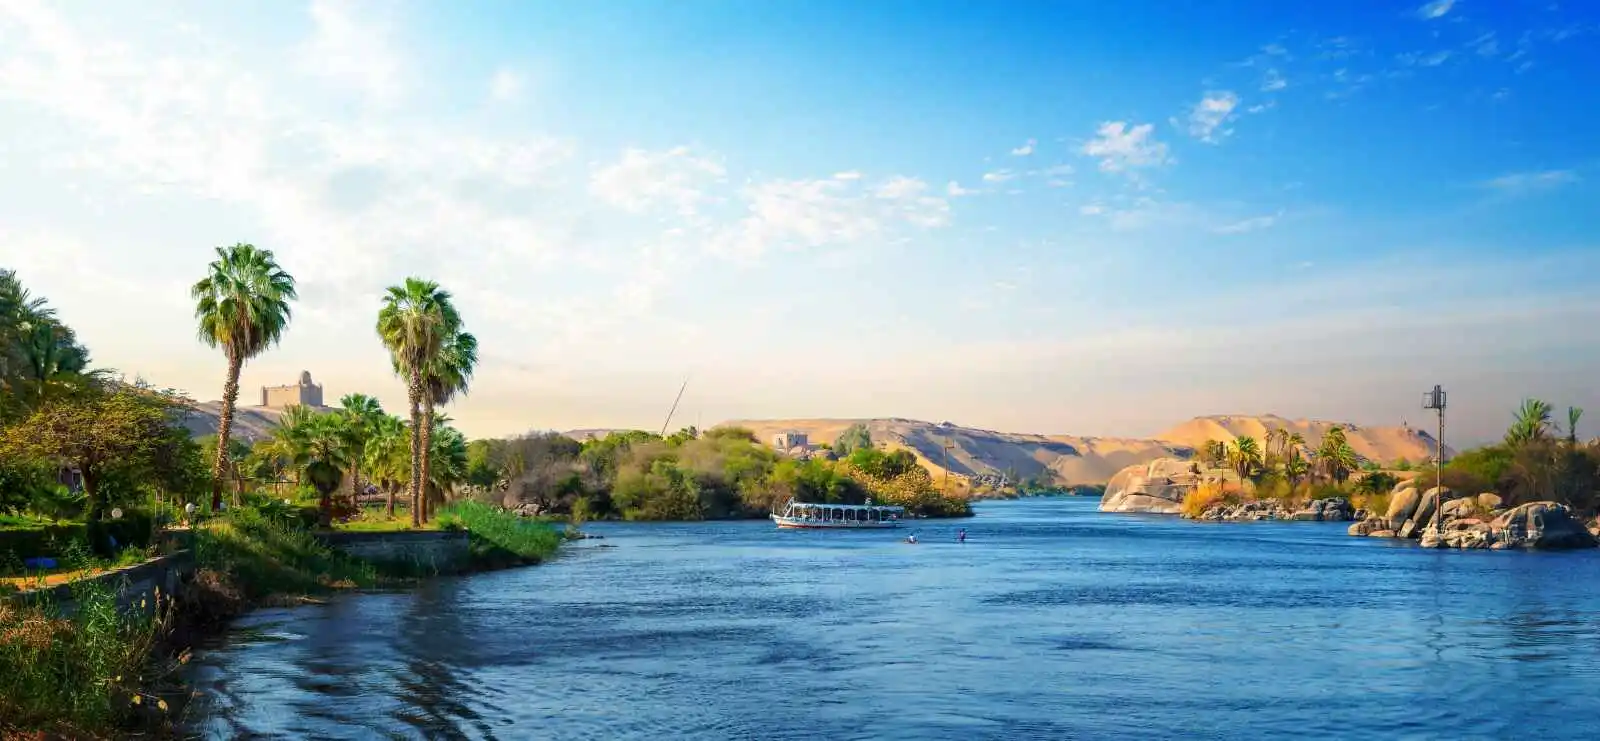 Le Nil en dahabeya